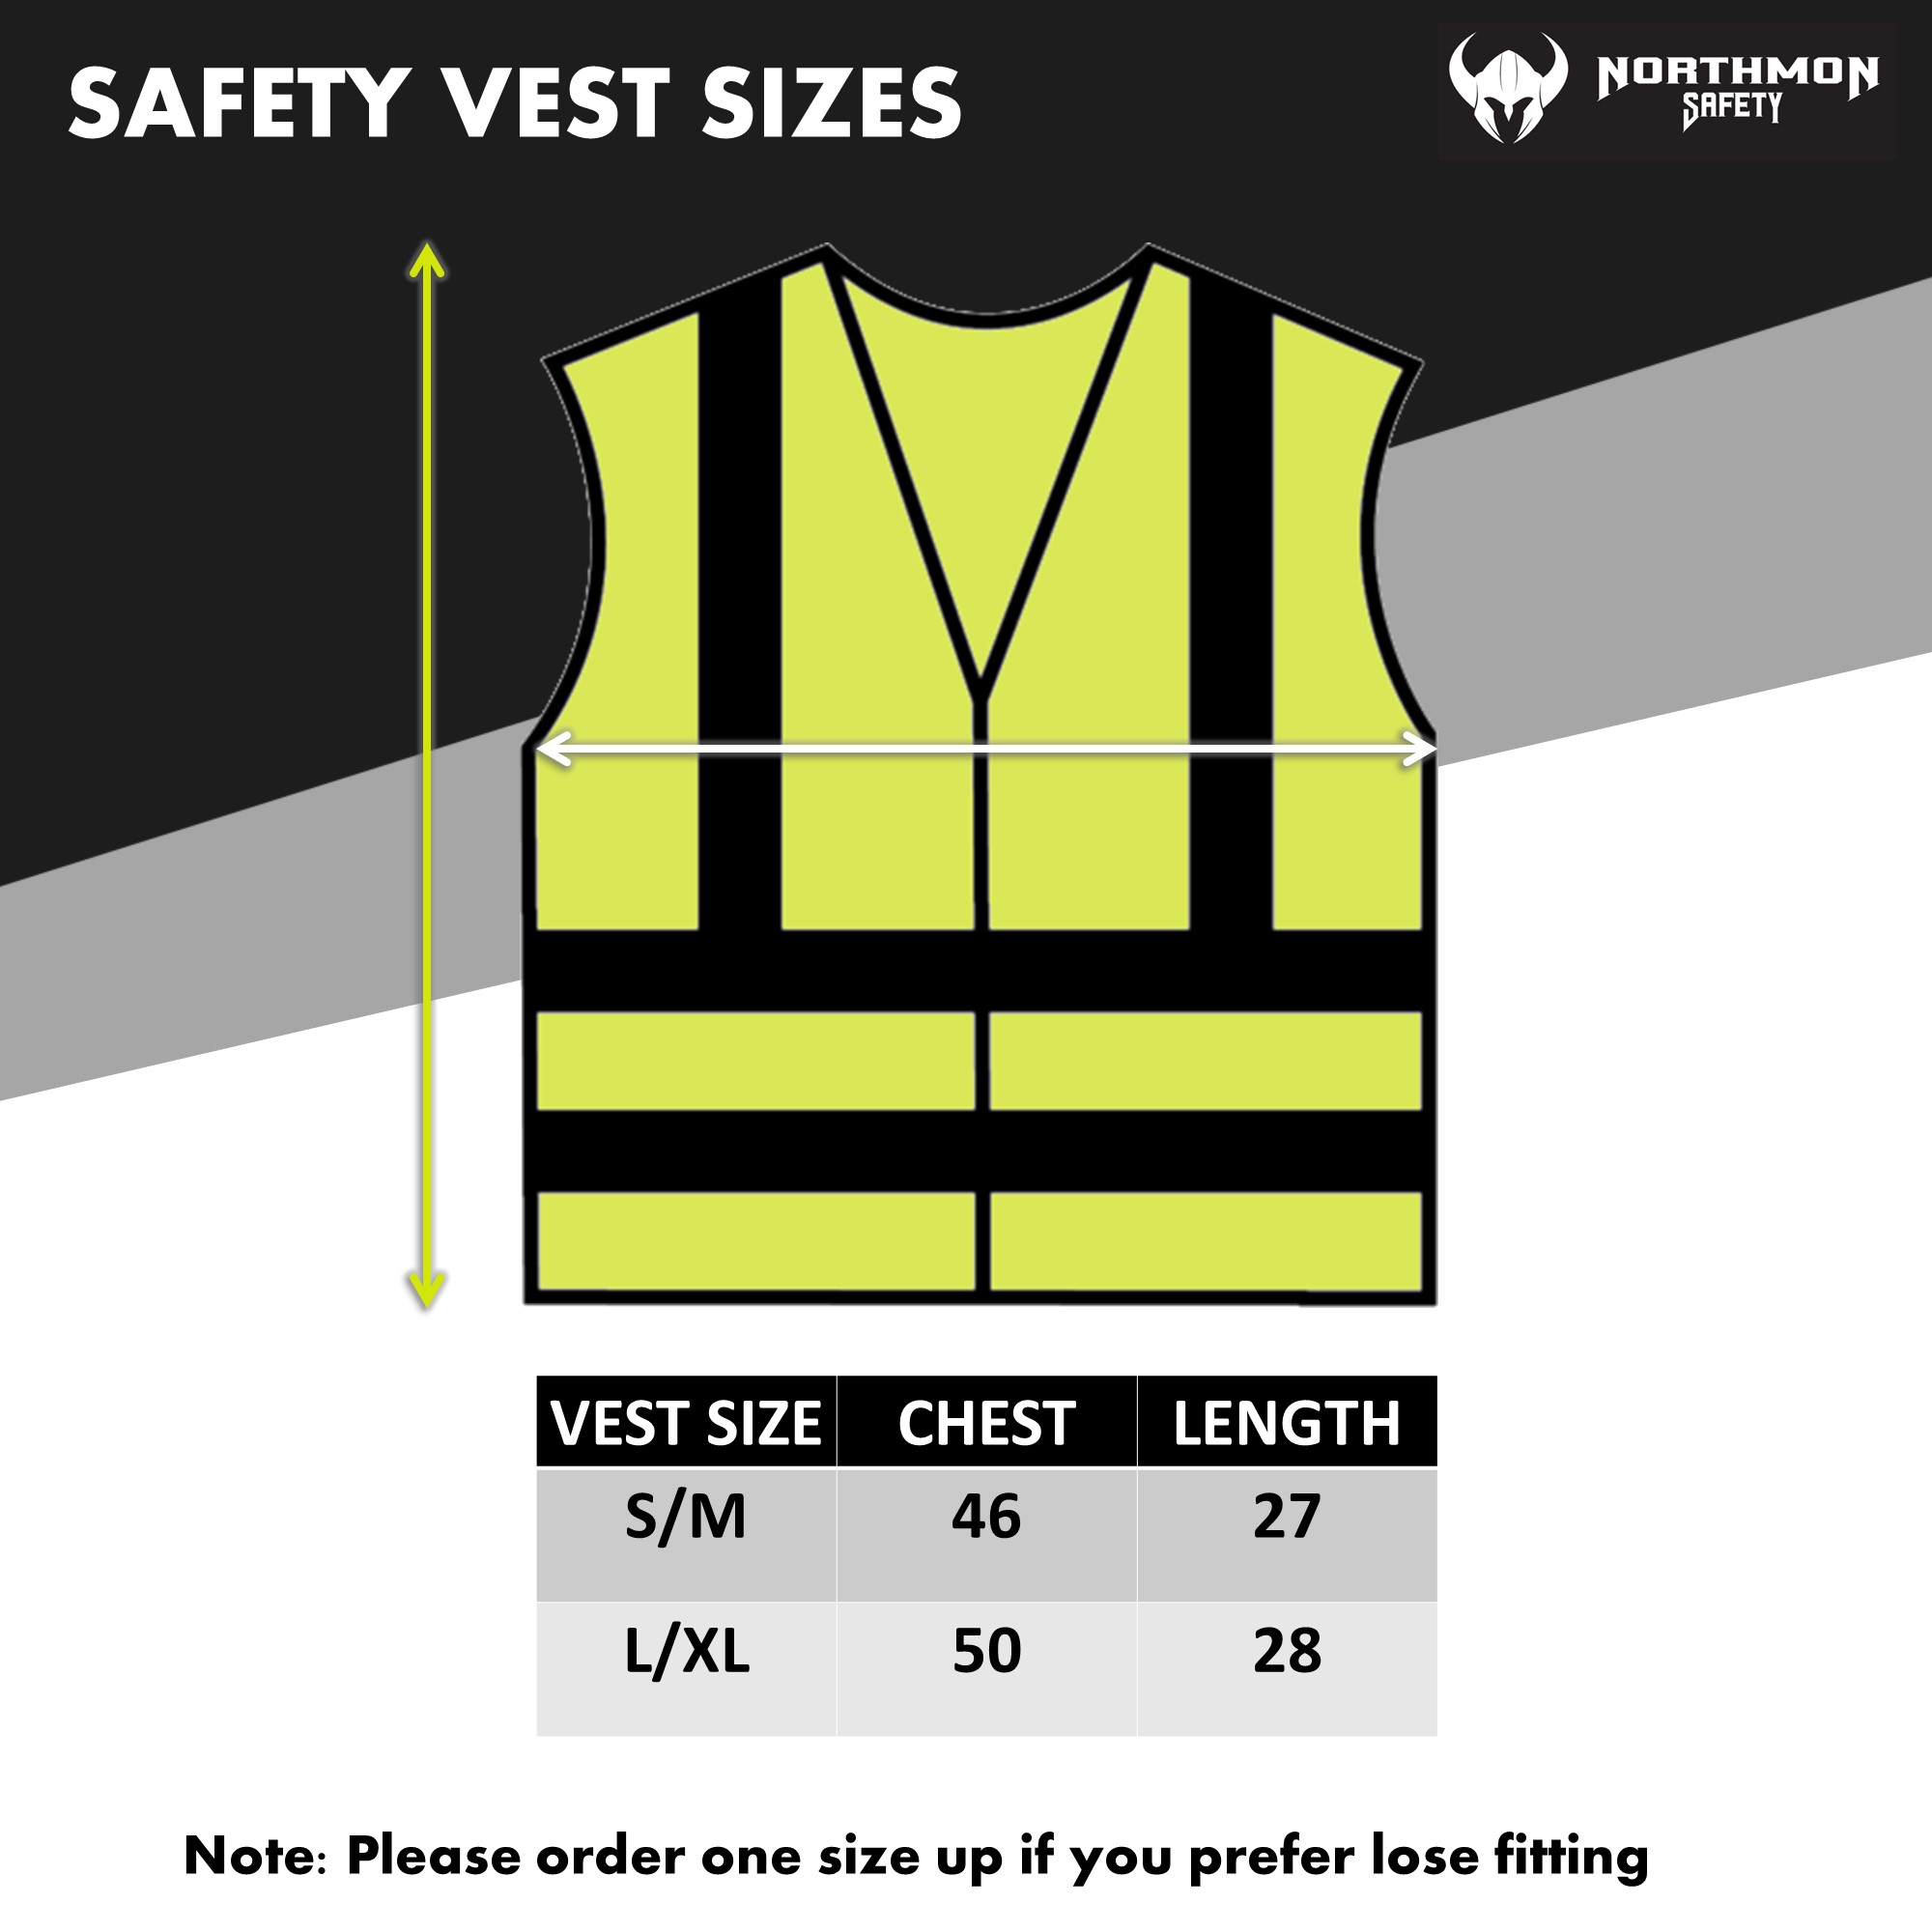 NORTHMON SAFETY Velcro Closure Light Weight Safety Vest - ANSI Class 2